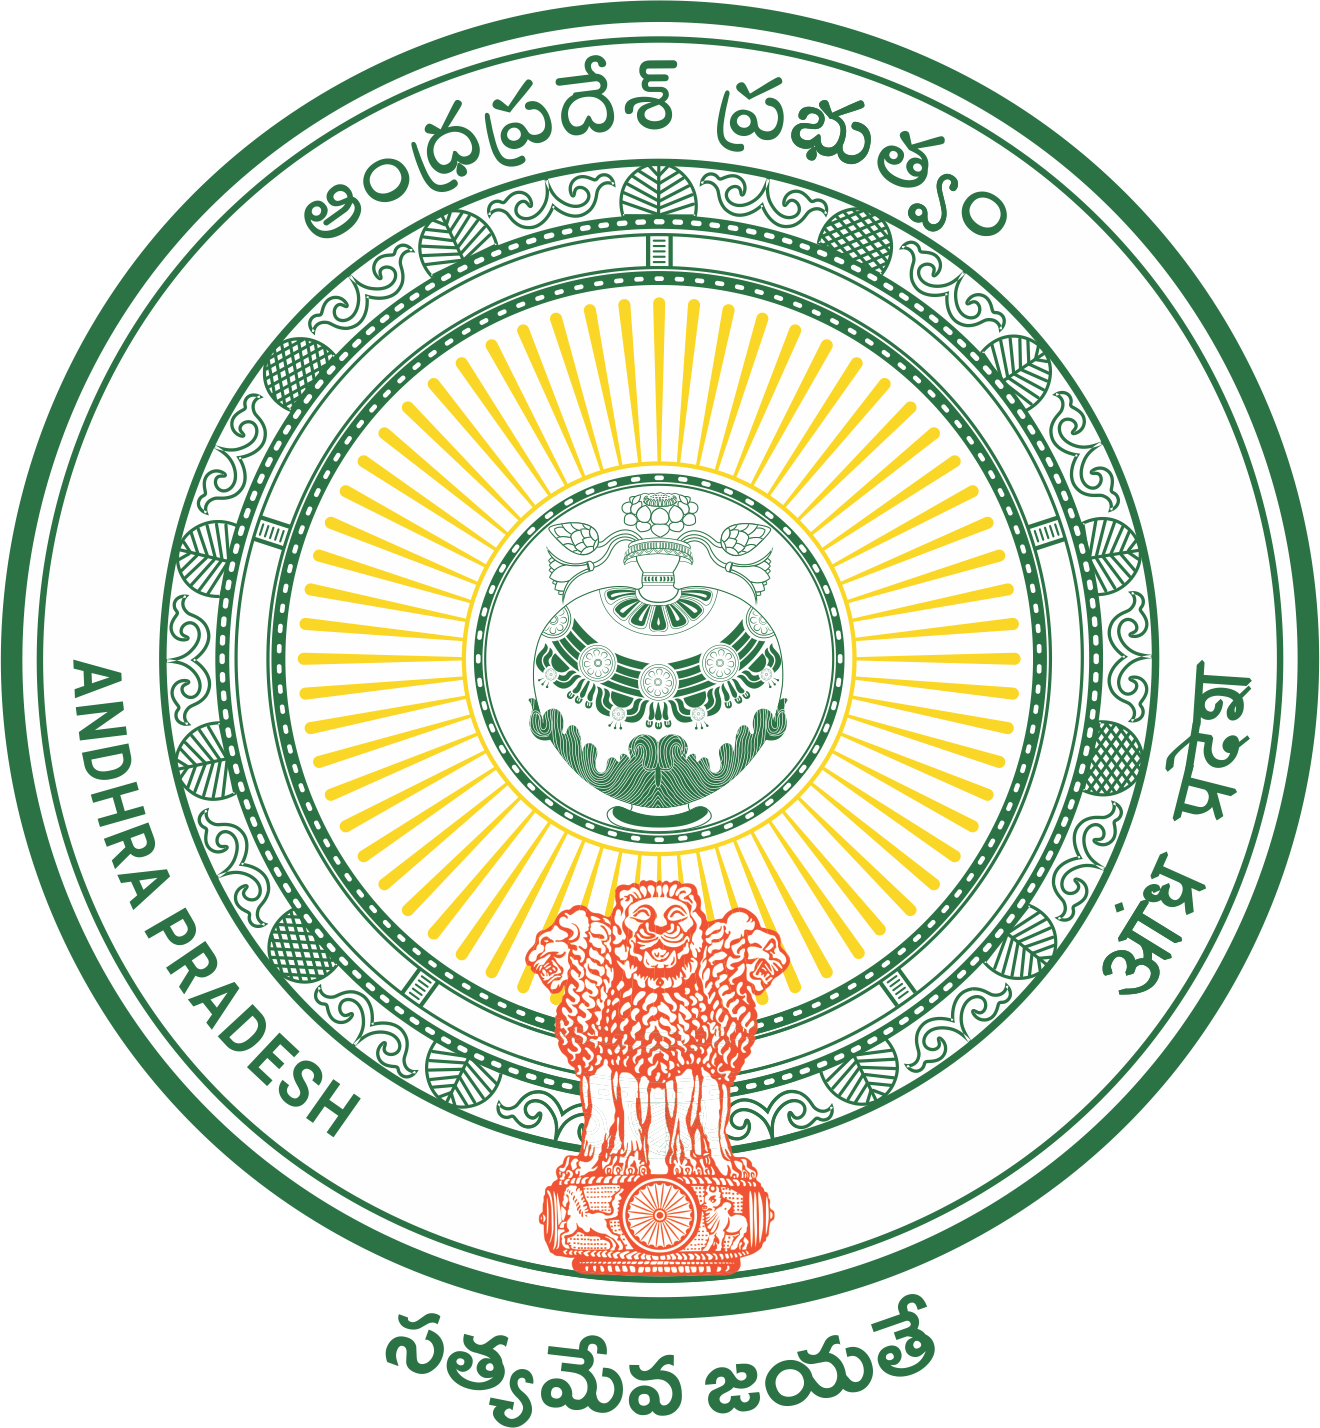 Andhra Pradesh logo